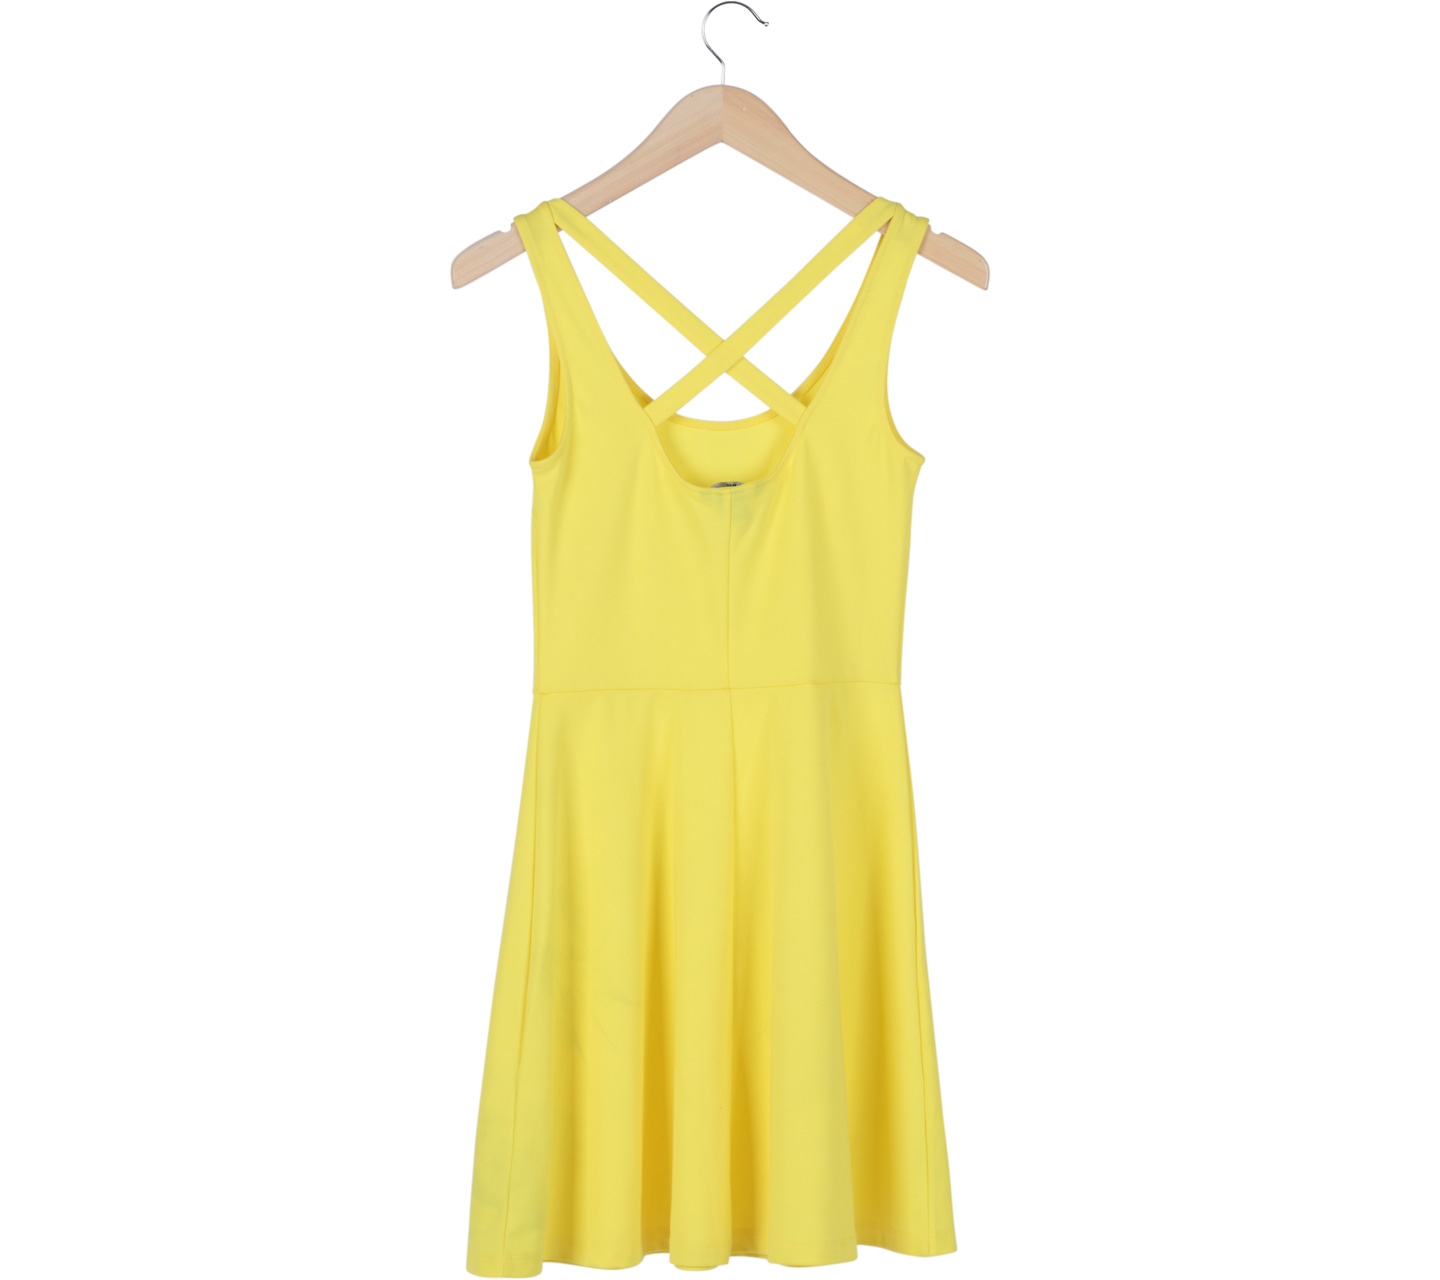 H&M Yellow Criss Cross Sleeveless Mini Dress